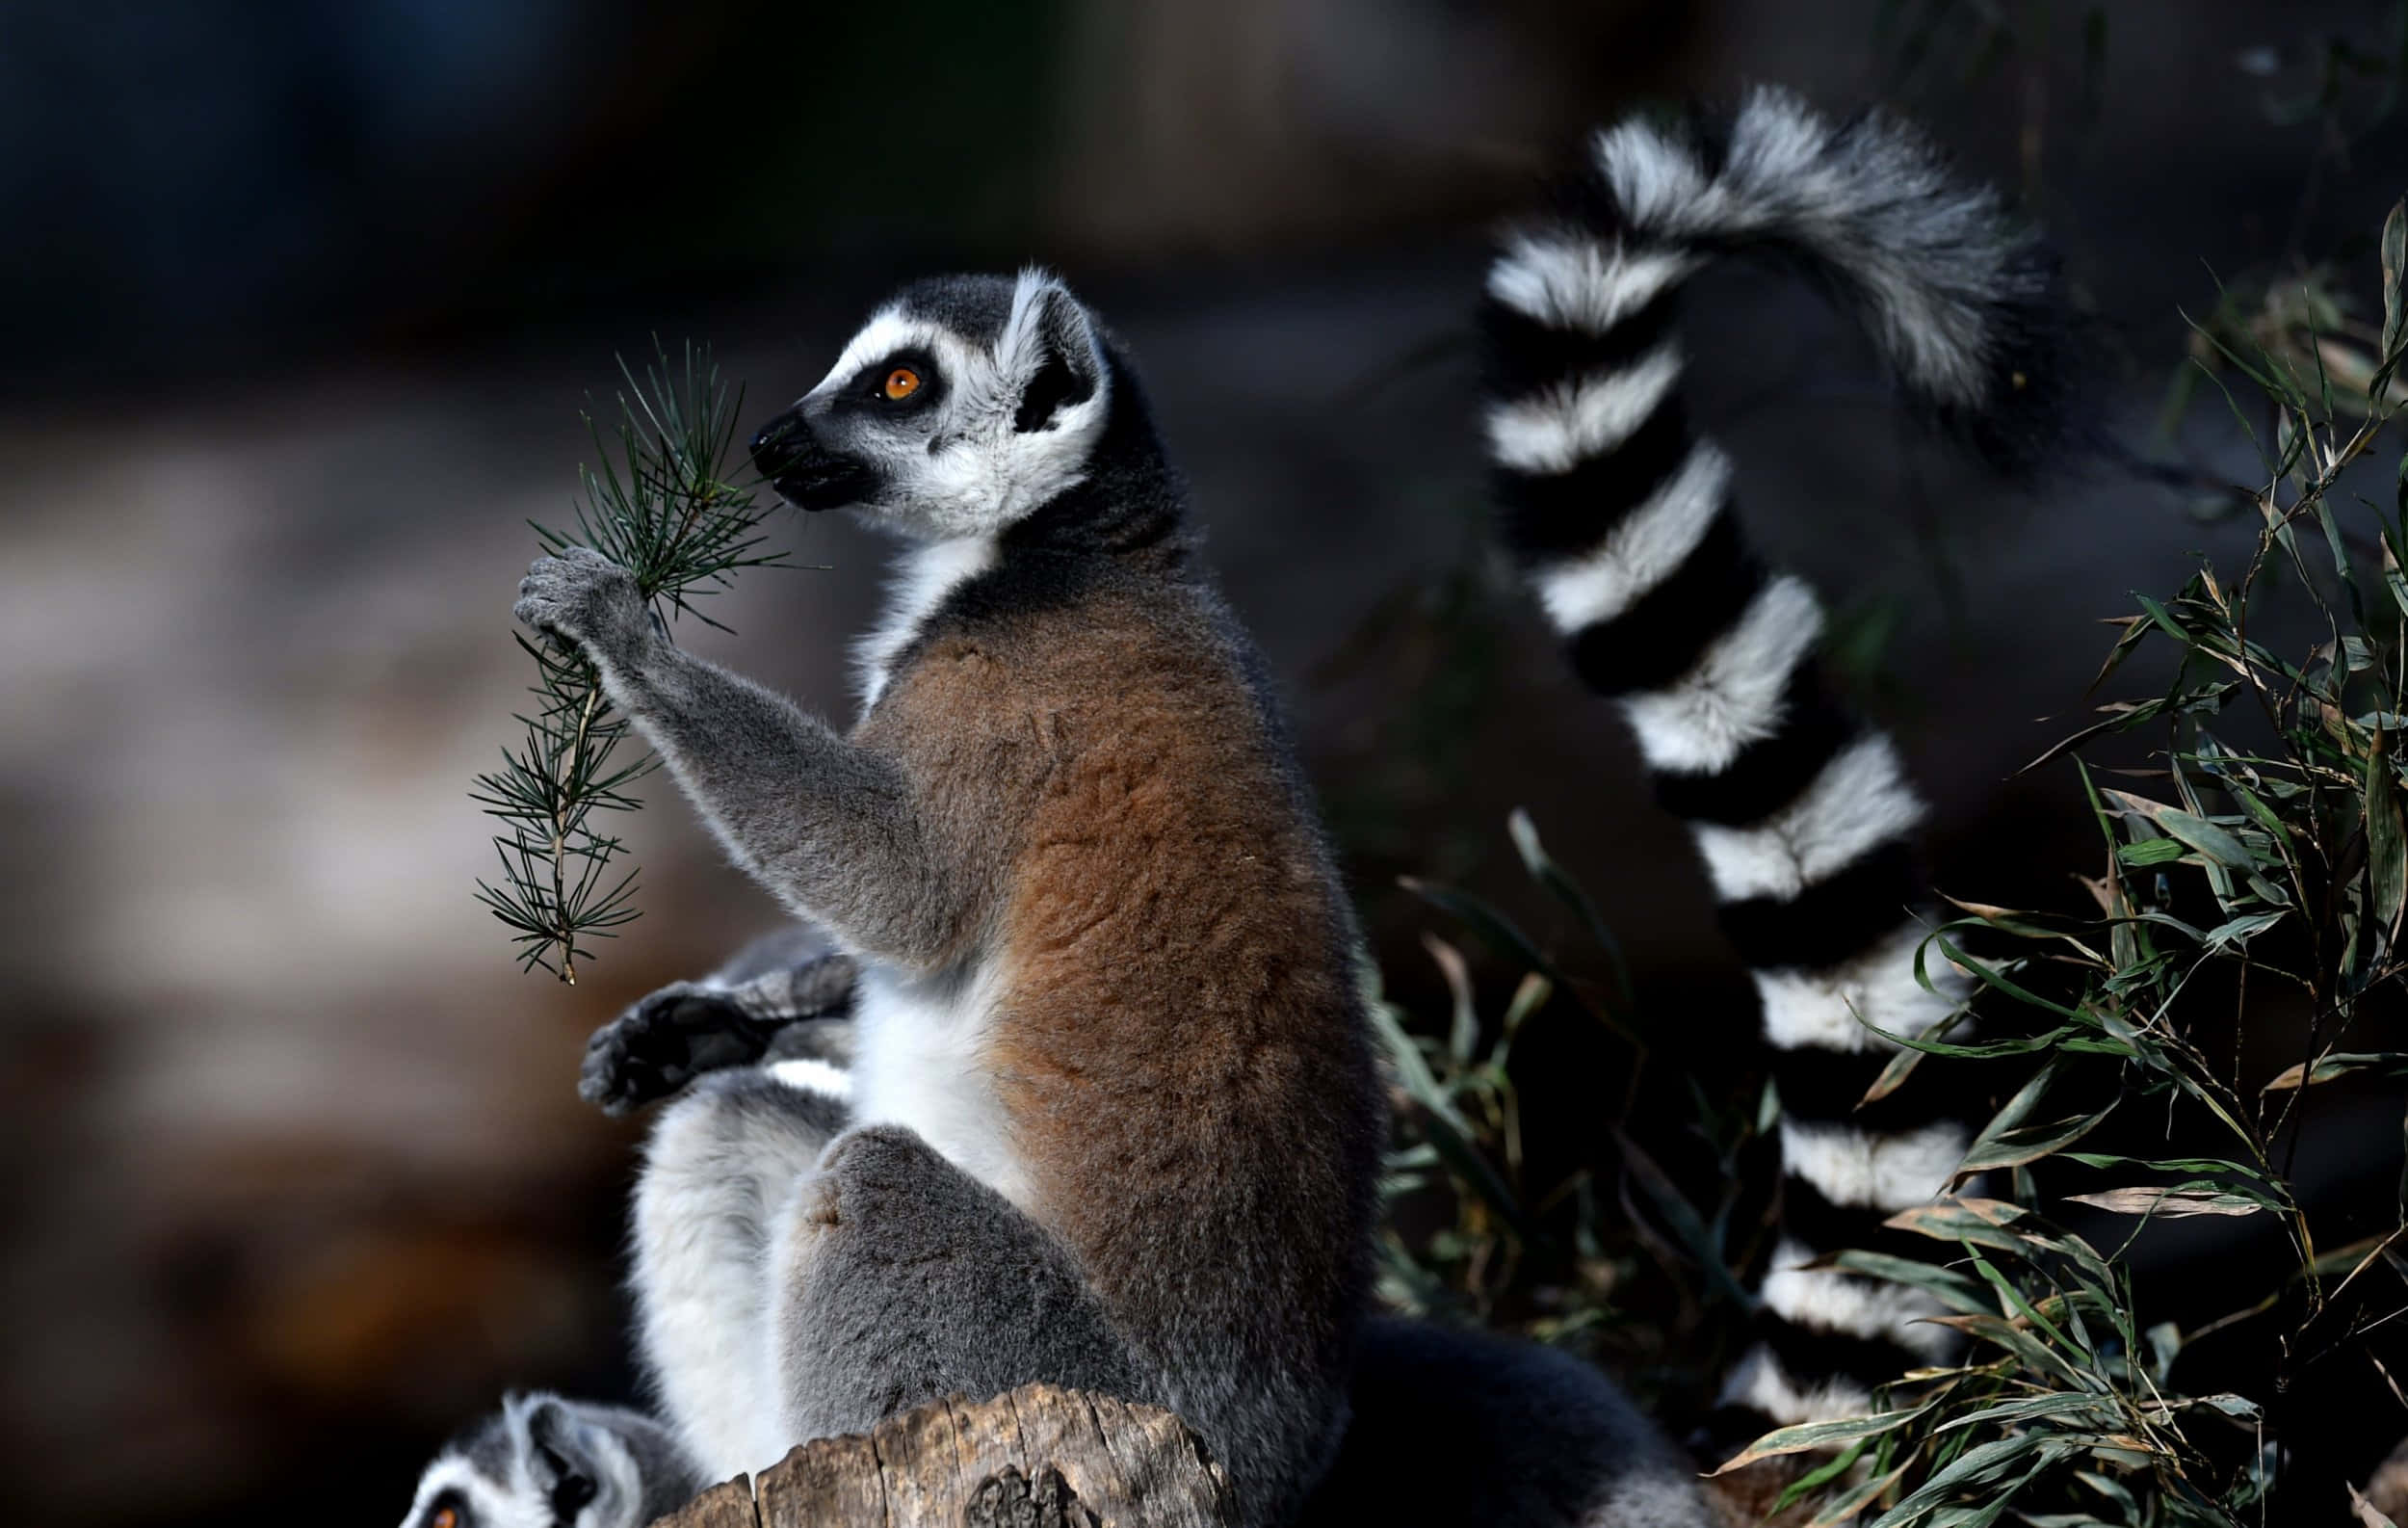 Stunning Portrait Of A Lemur In Its Natural Habitat Wallpaper